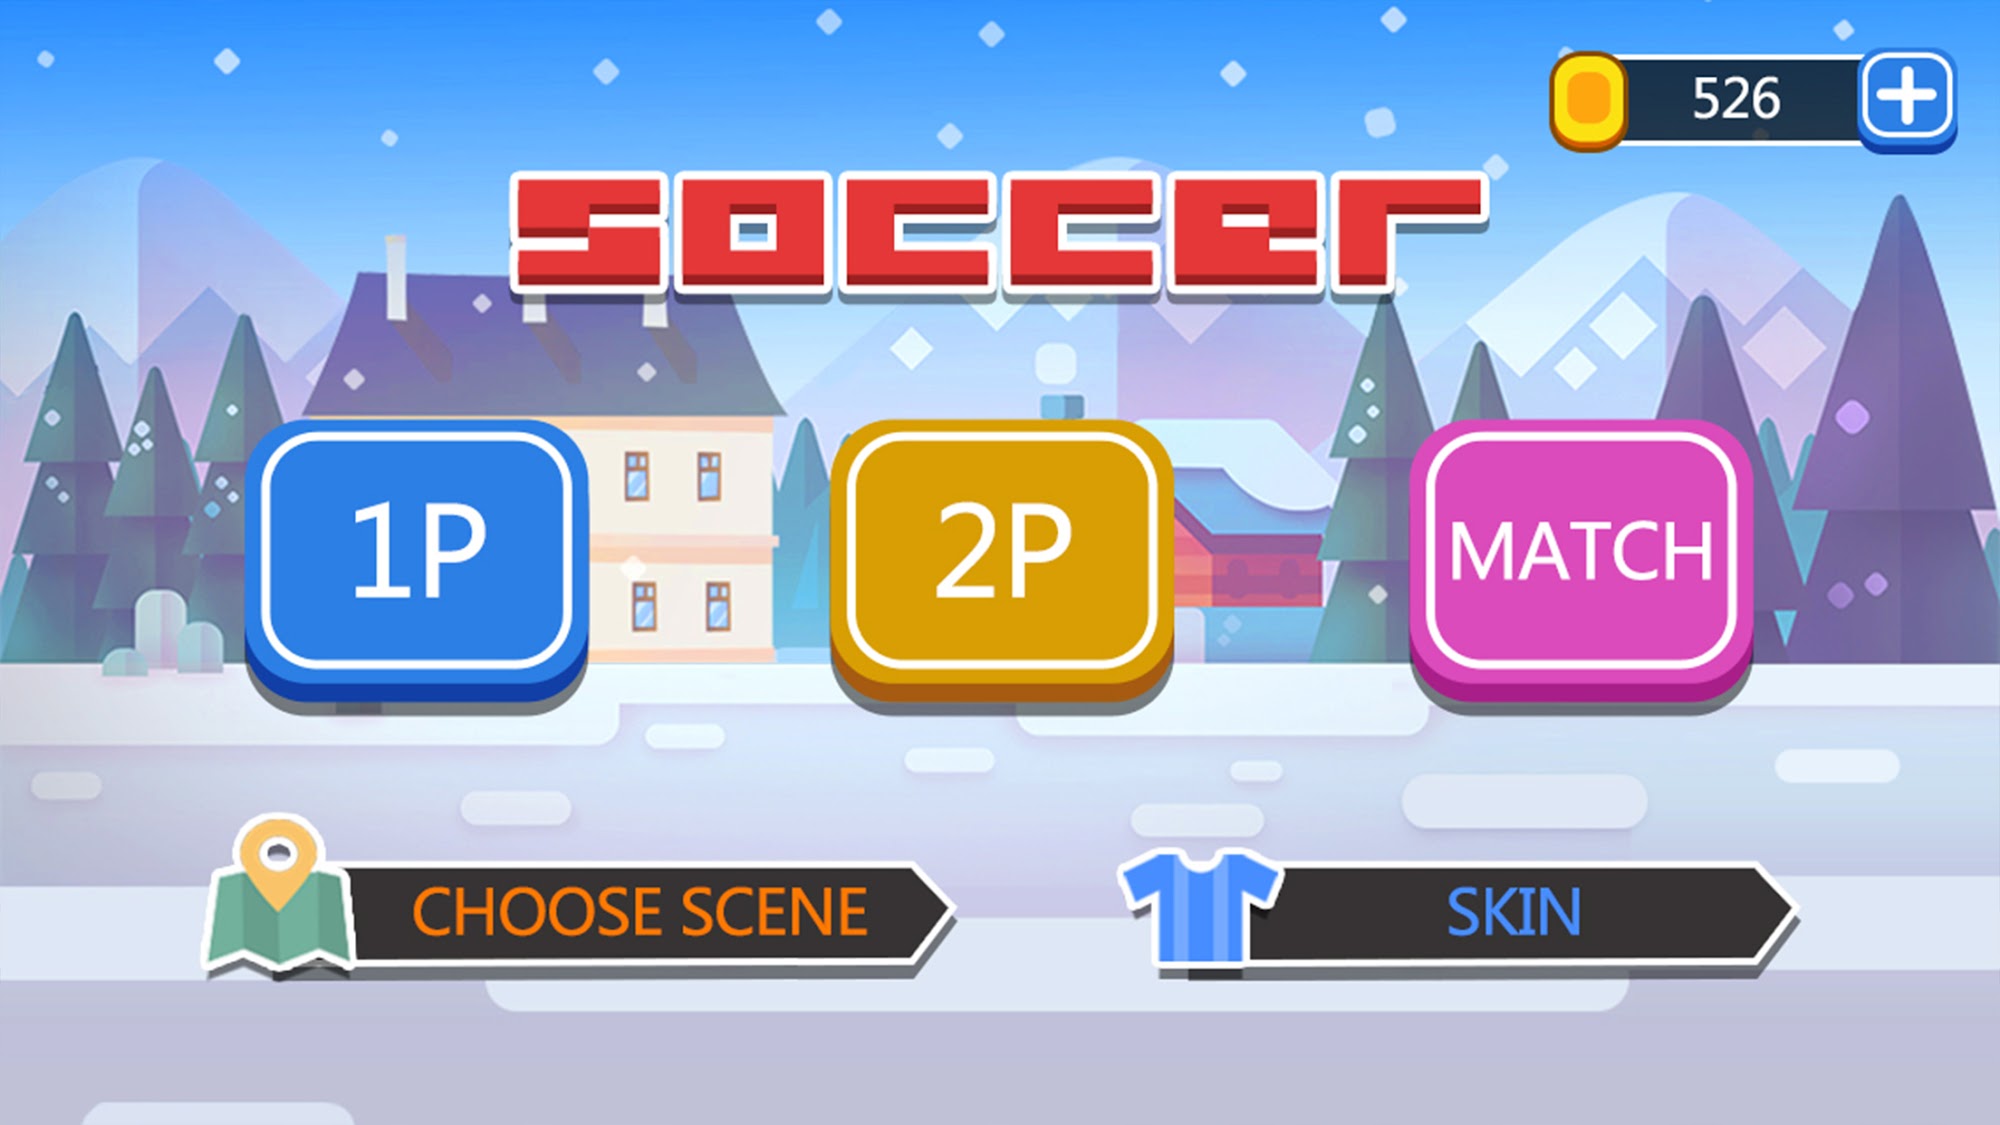 Droll Soccer - Android game screenshots.